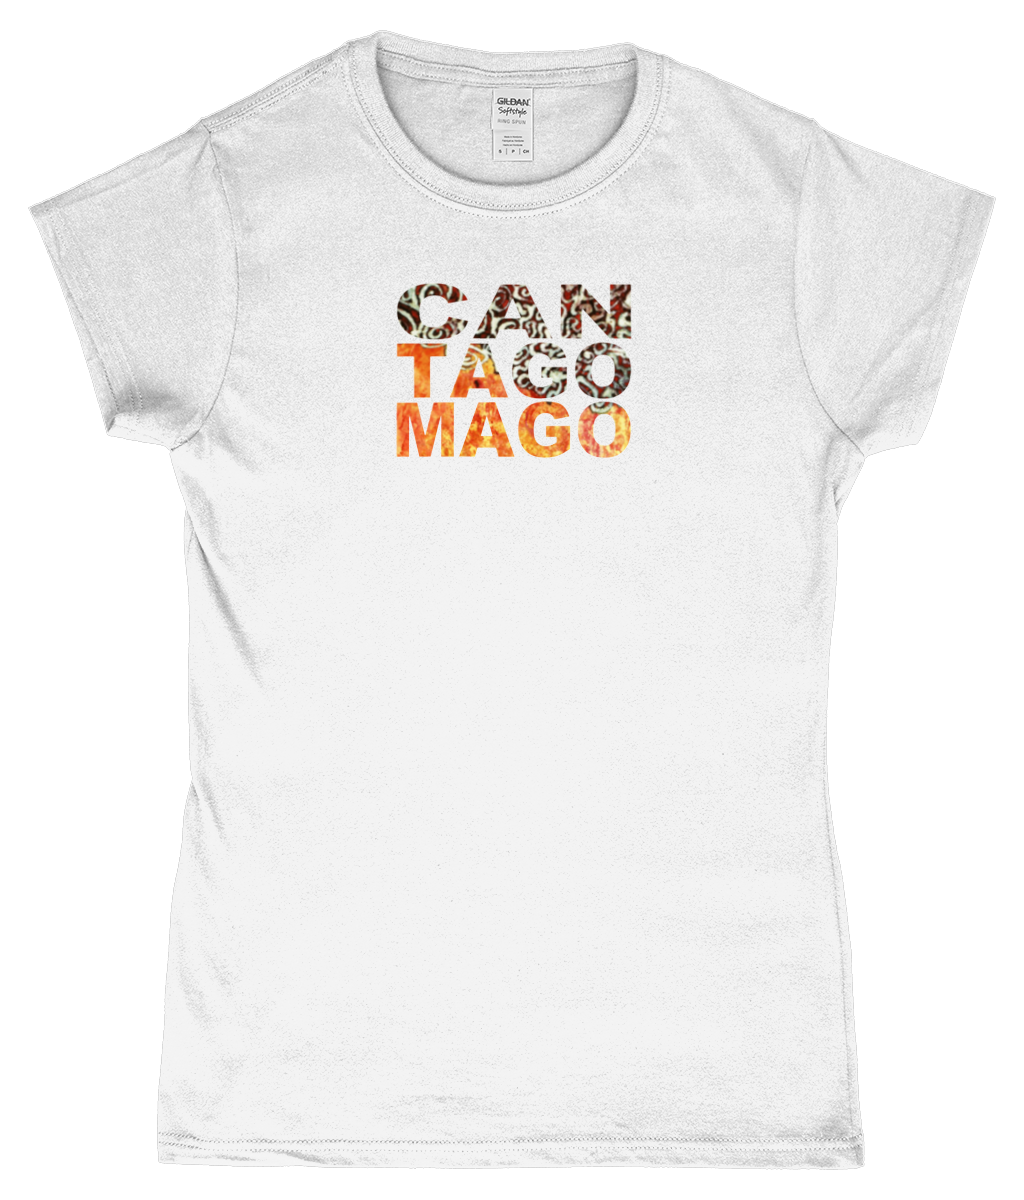 Can, Tago Mago, T-Shirt, Women's